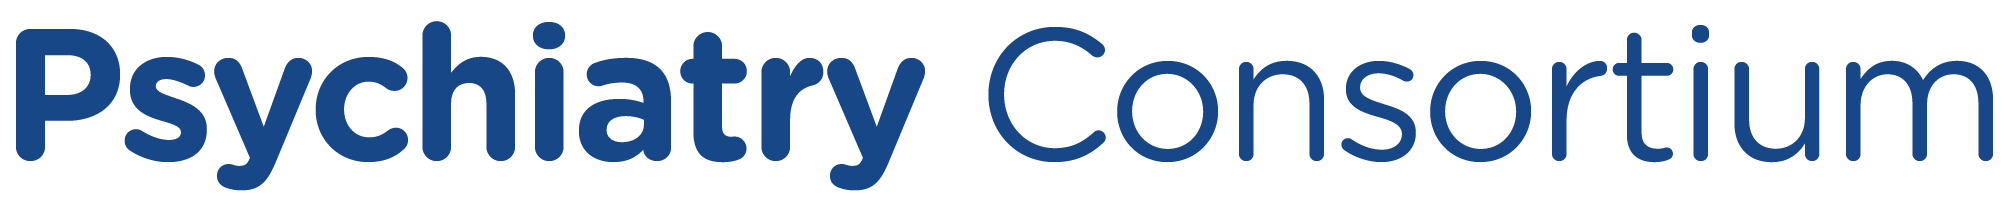 Psychiatry Consortium logo